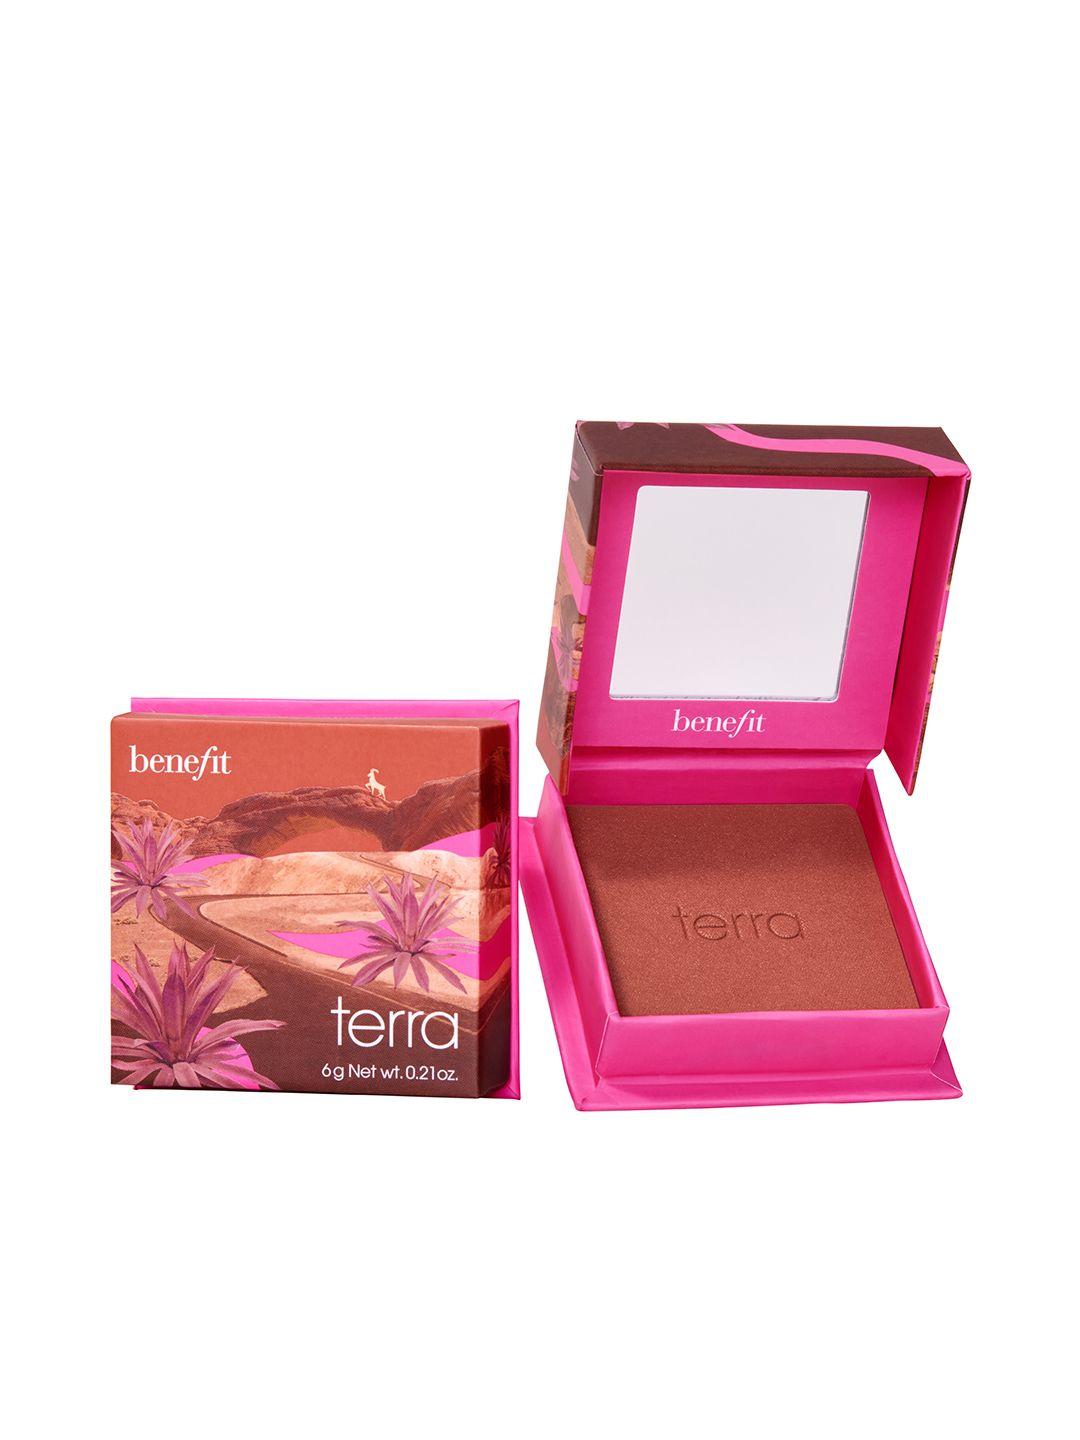 benefit cosmetics smudge-proof soft shimmer finish golden brick-red blush 6 g - terra